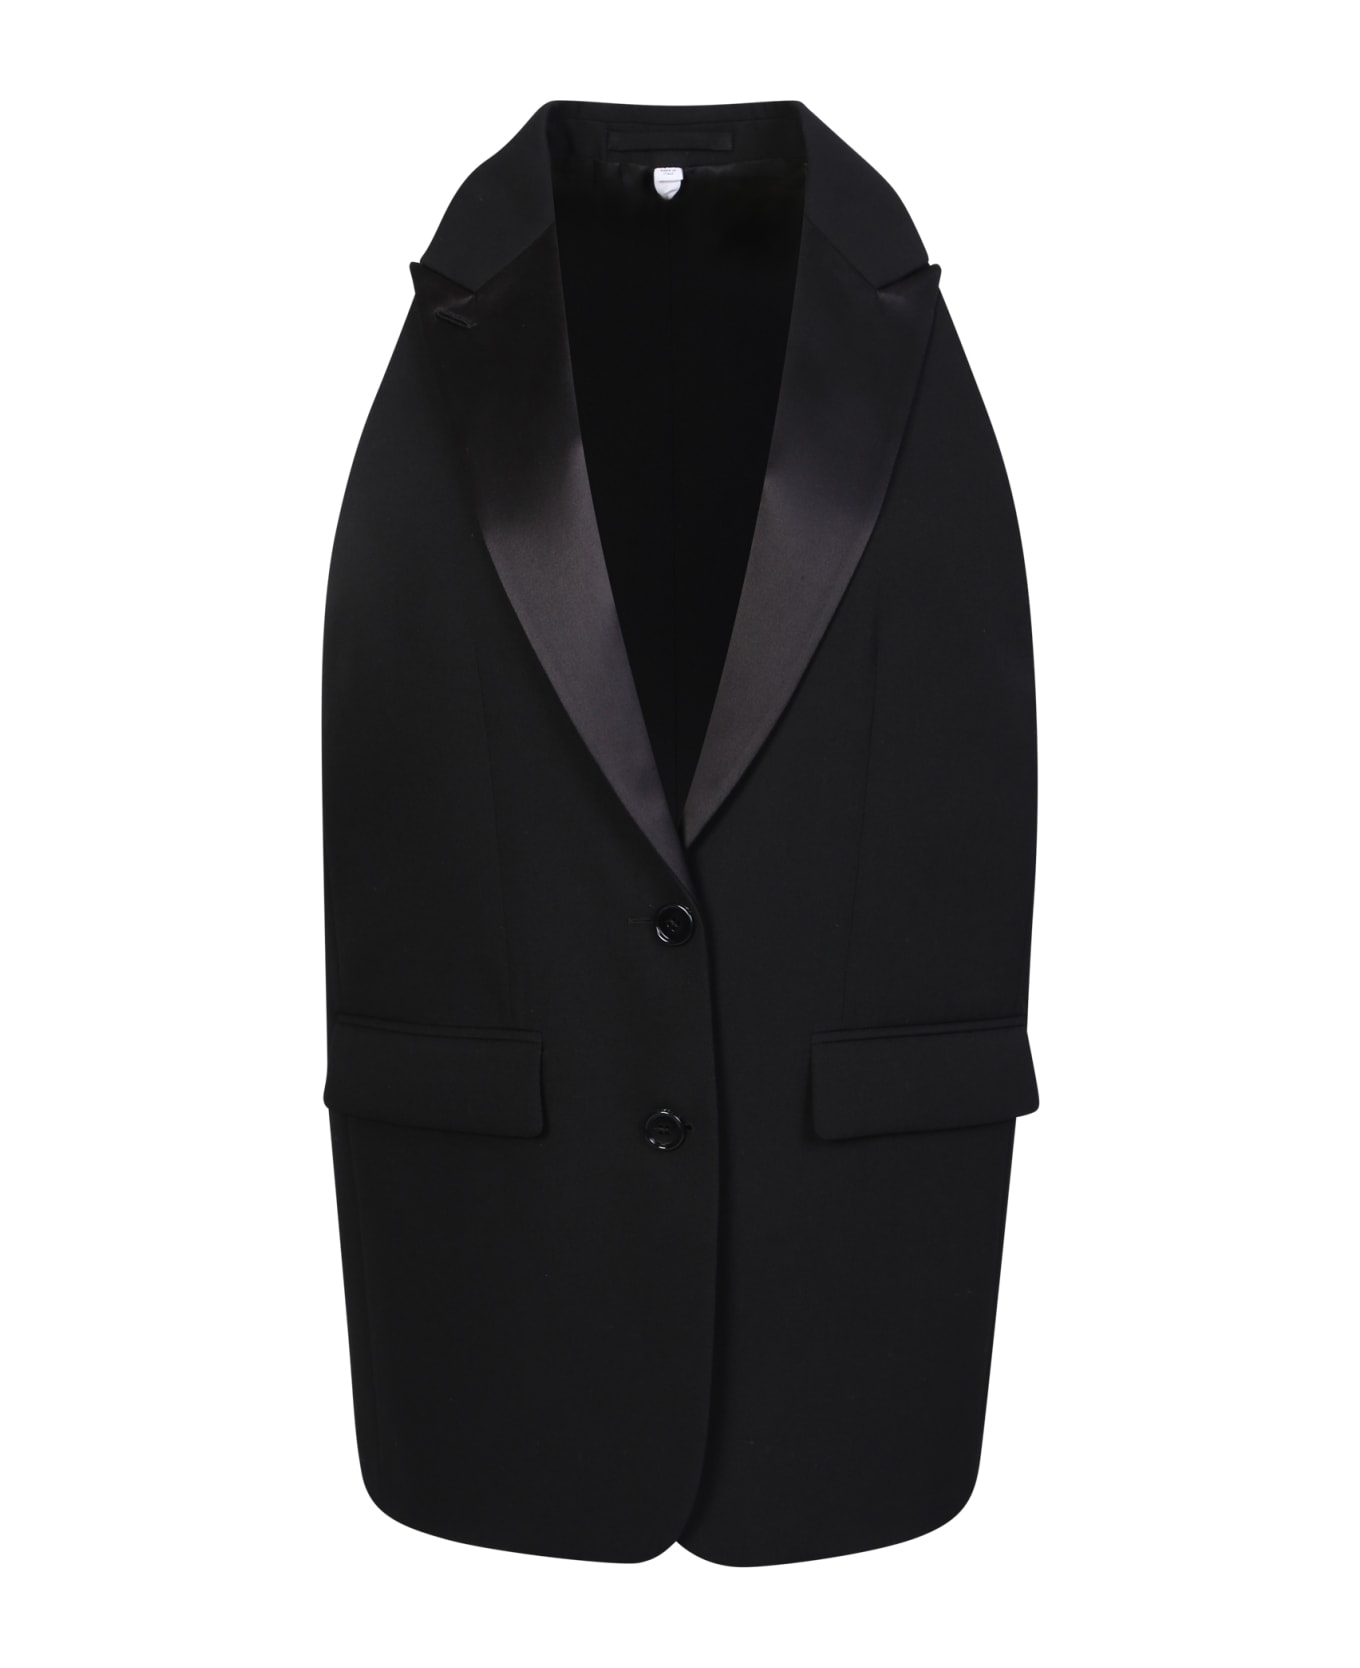 Burberry Black Tailored Sleeveless Jacket - Black